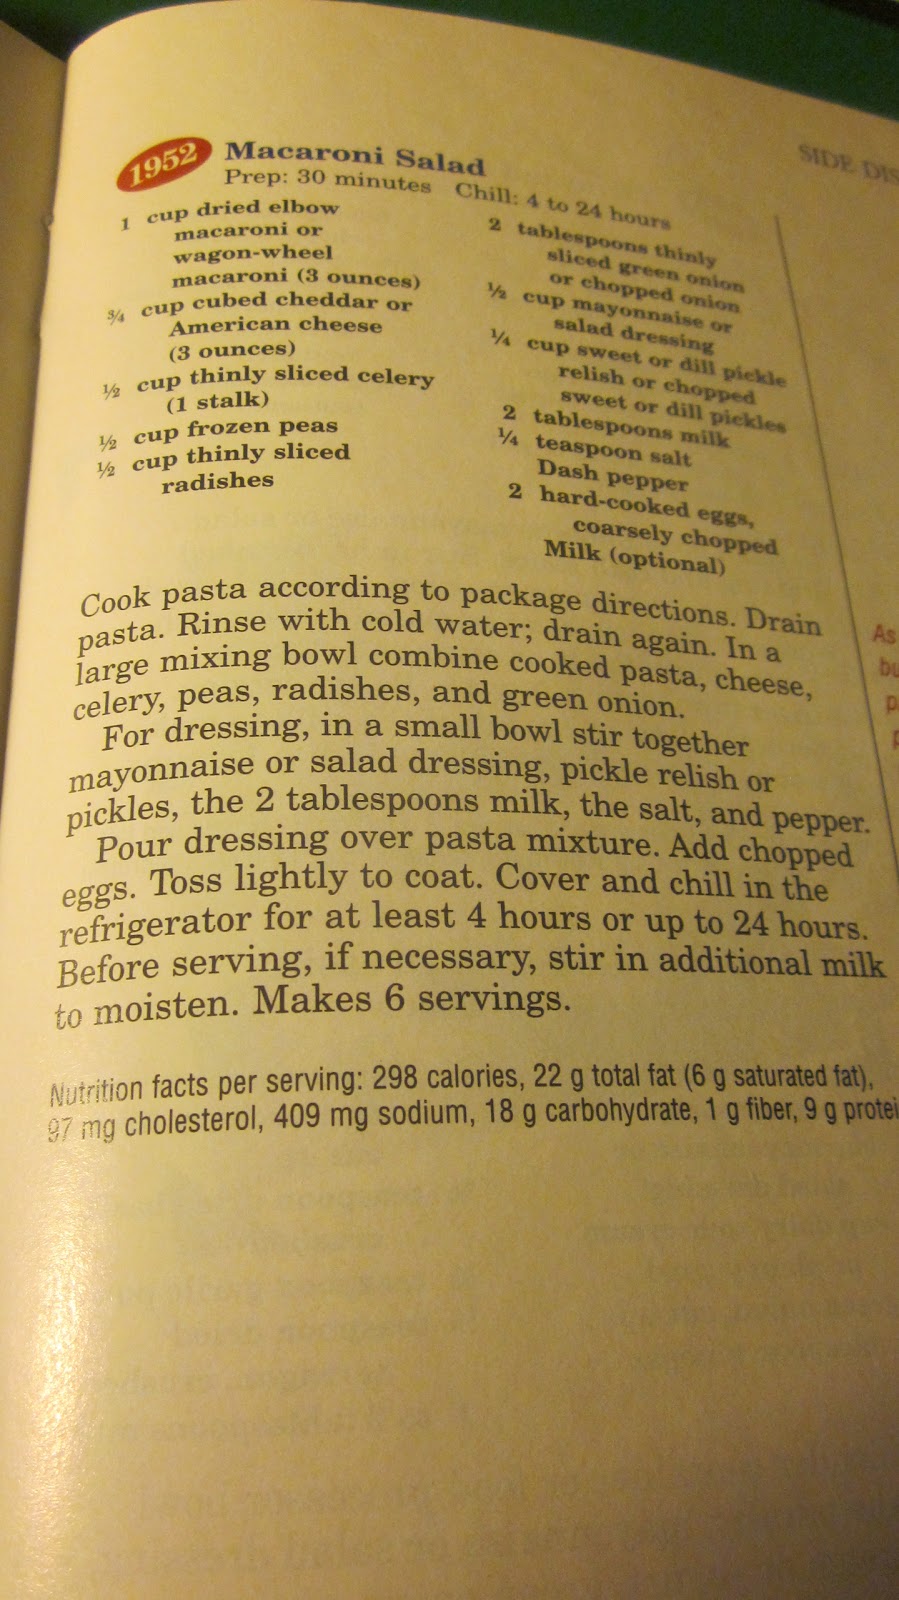 Grandma S Vintage Recipes 1952 Macaroni Salad From Better Homes